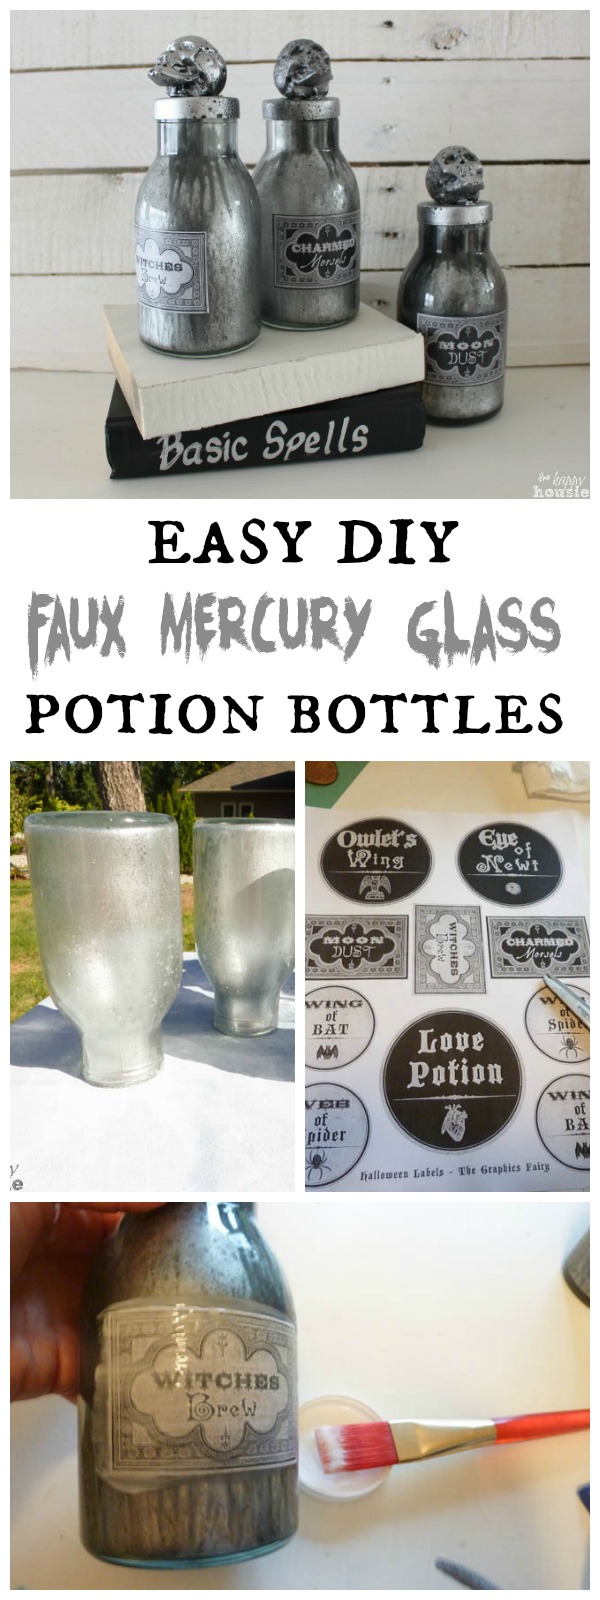 Easy DIY Faux Mercury Glass Potion Bottles poster.